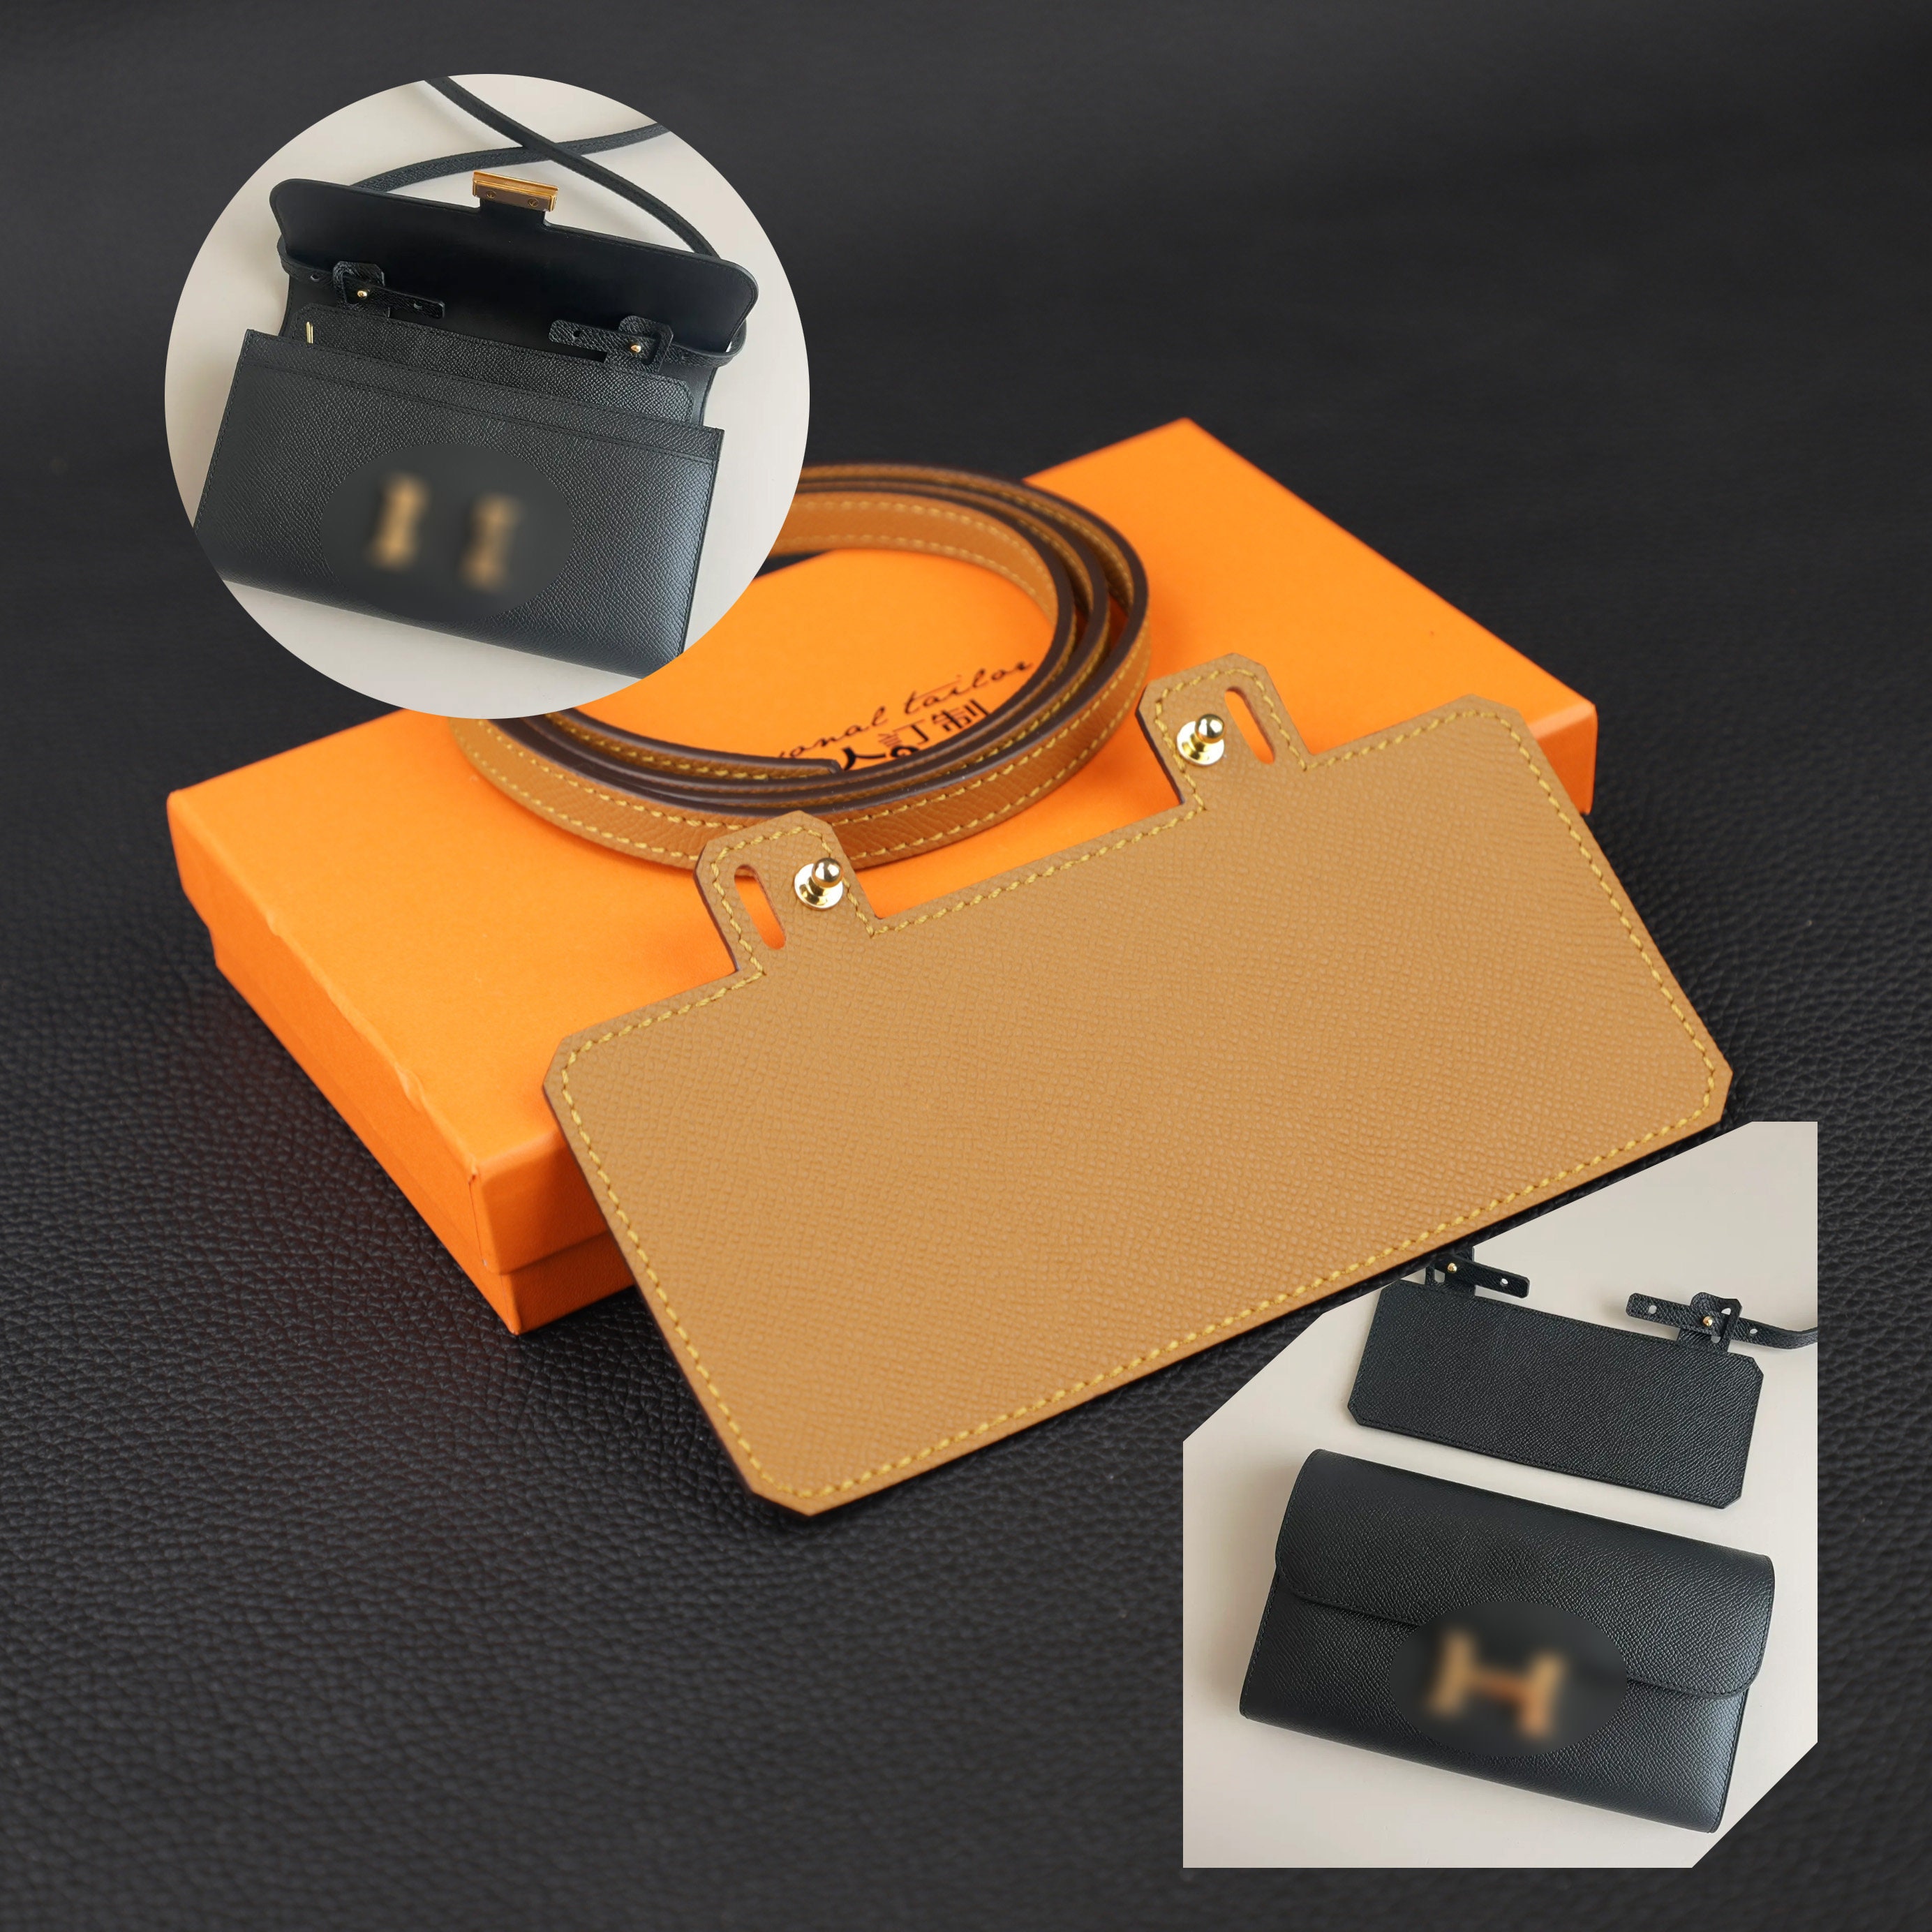 Hermès 2020 Dogon Compact Wallet - Blue Wallets, Accessories